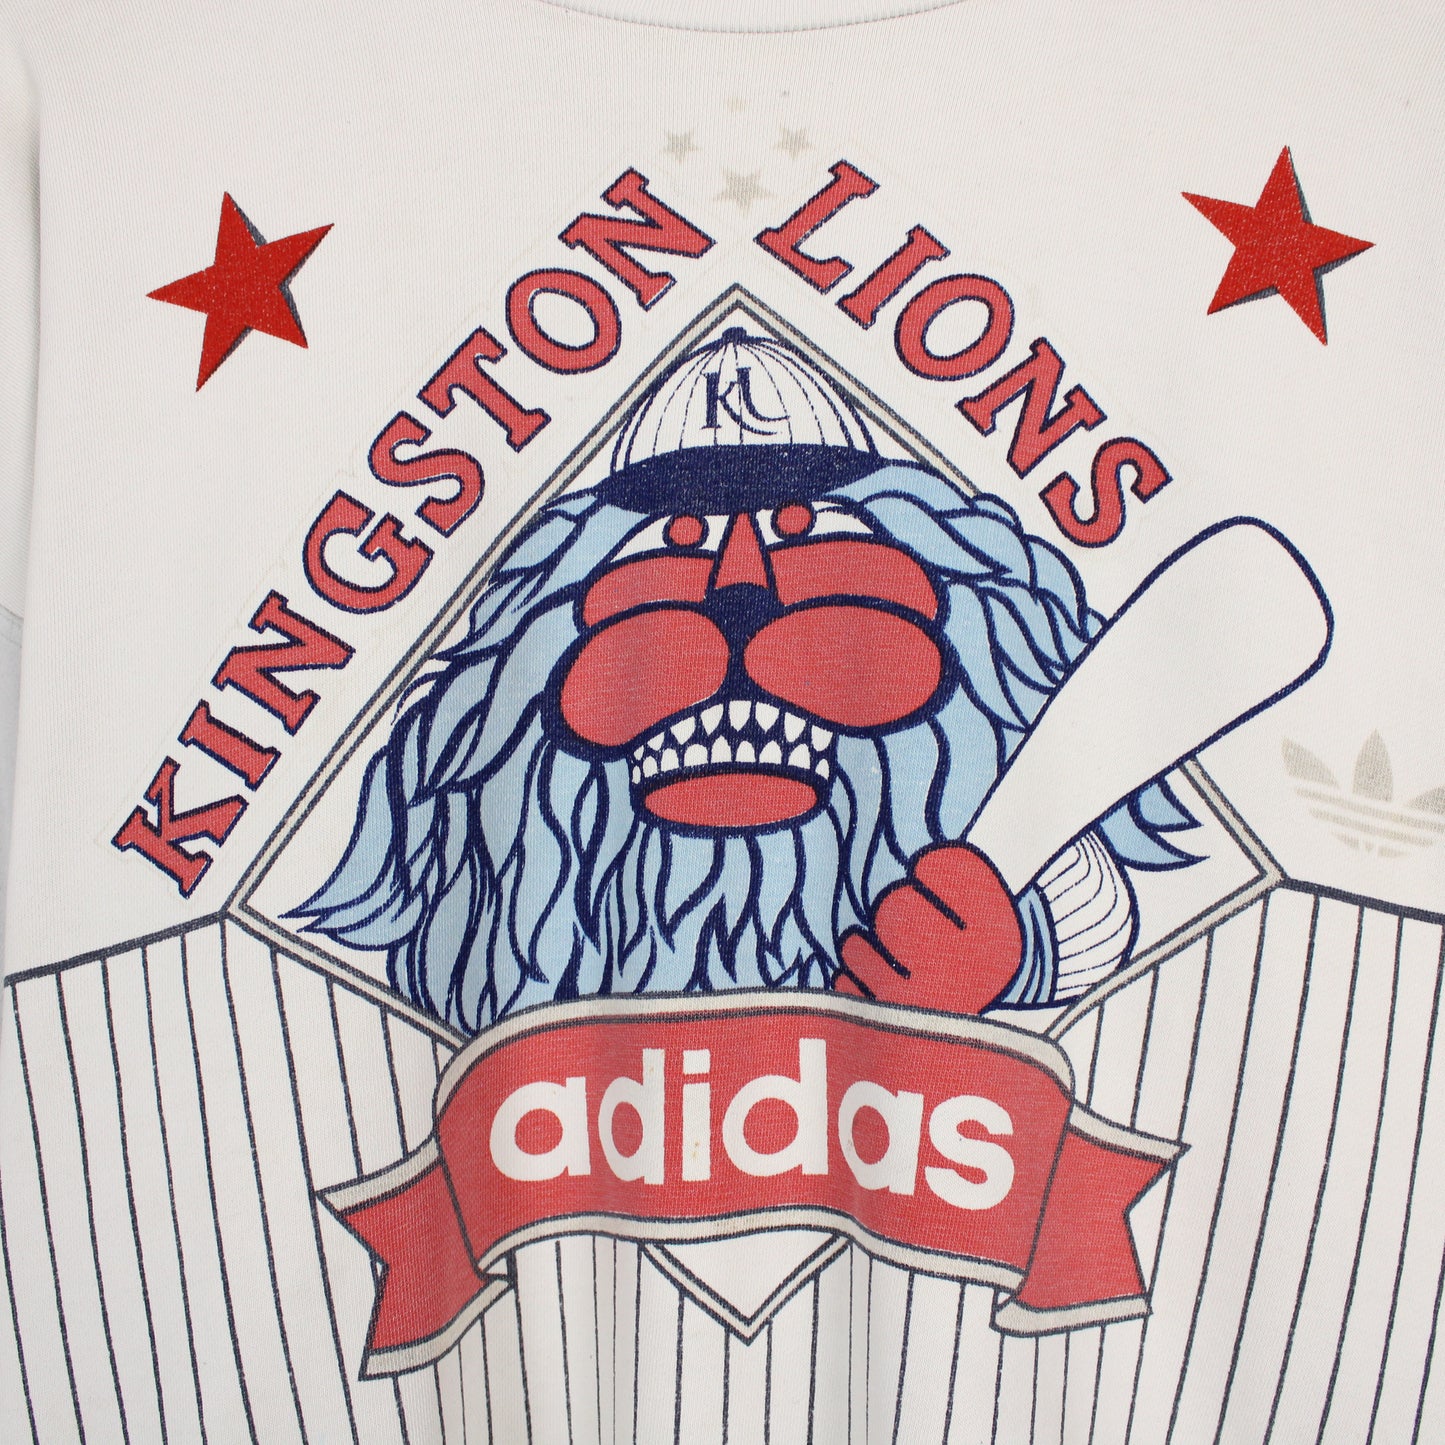 Vintage 80s Adidas Kingston Lions Baseball Sweatshirt - L